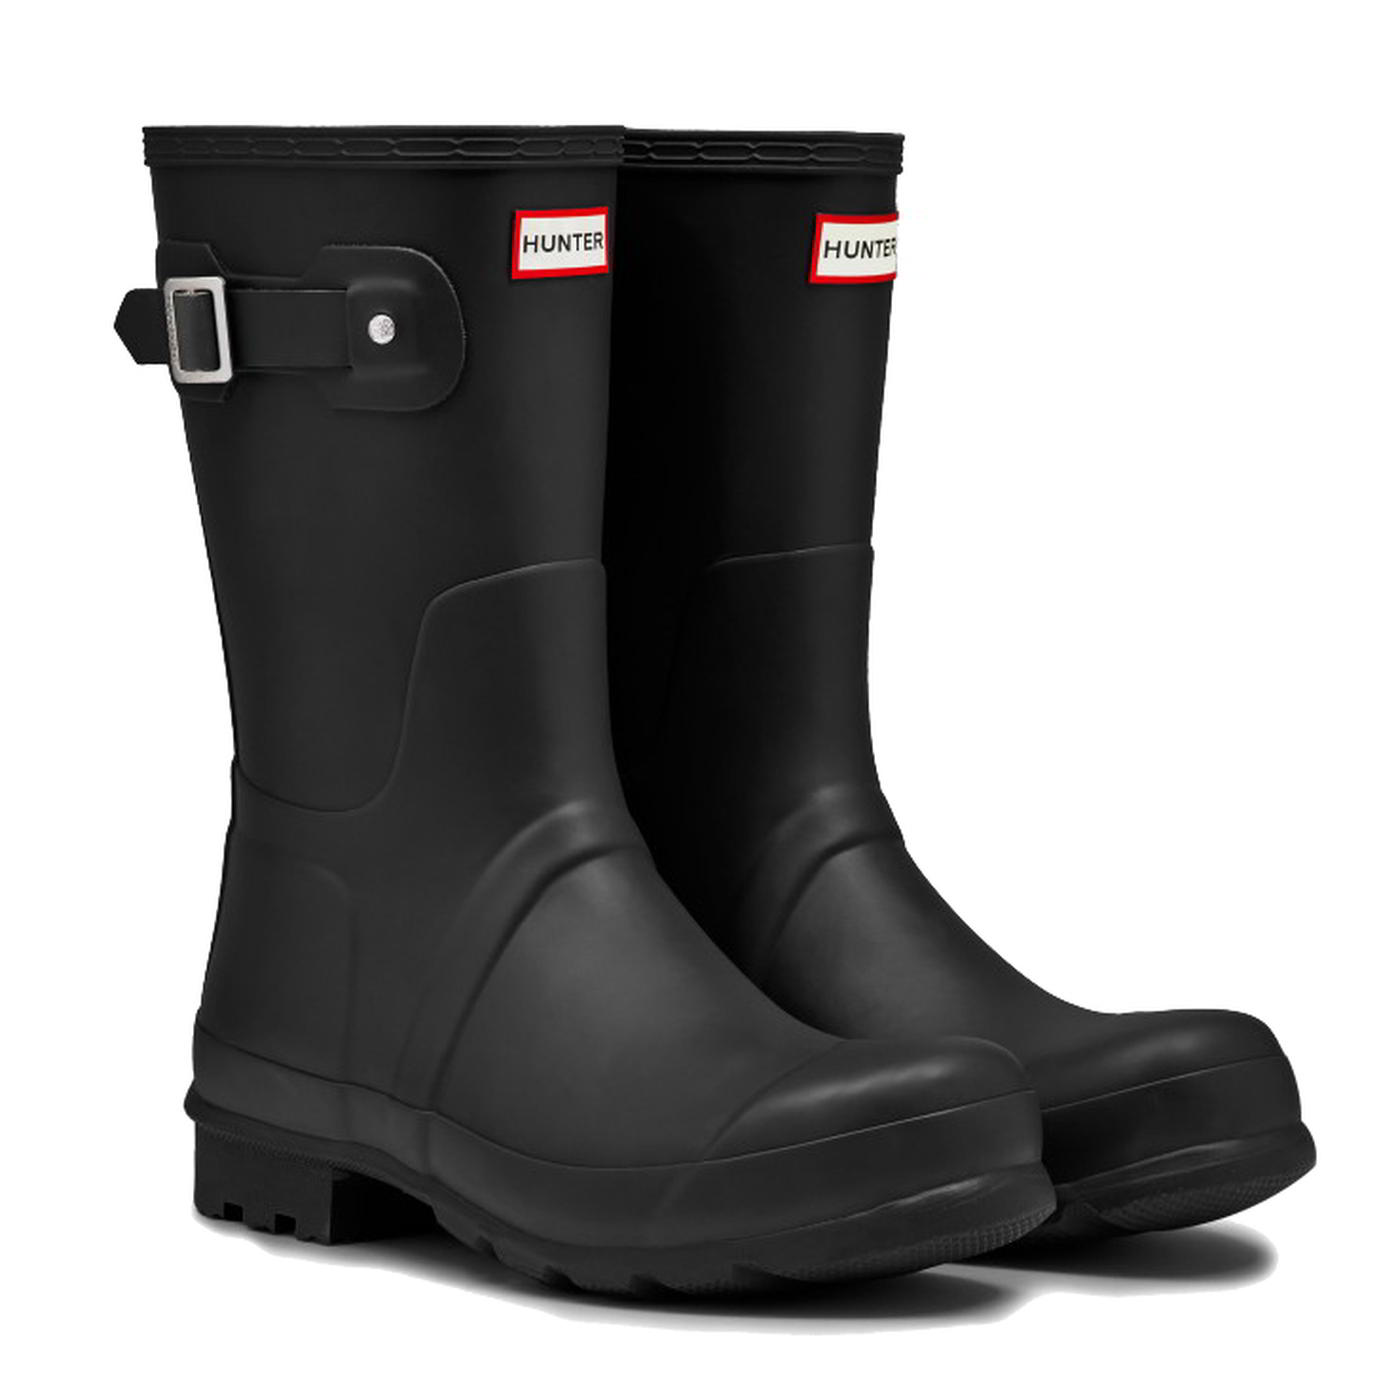 Hunter Mens Original Short Wellies Rain Boots - Black 2951